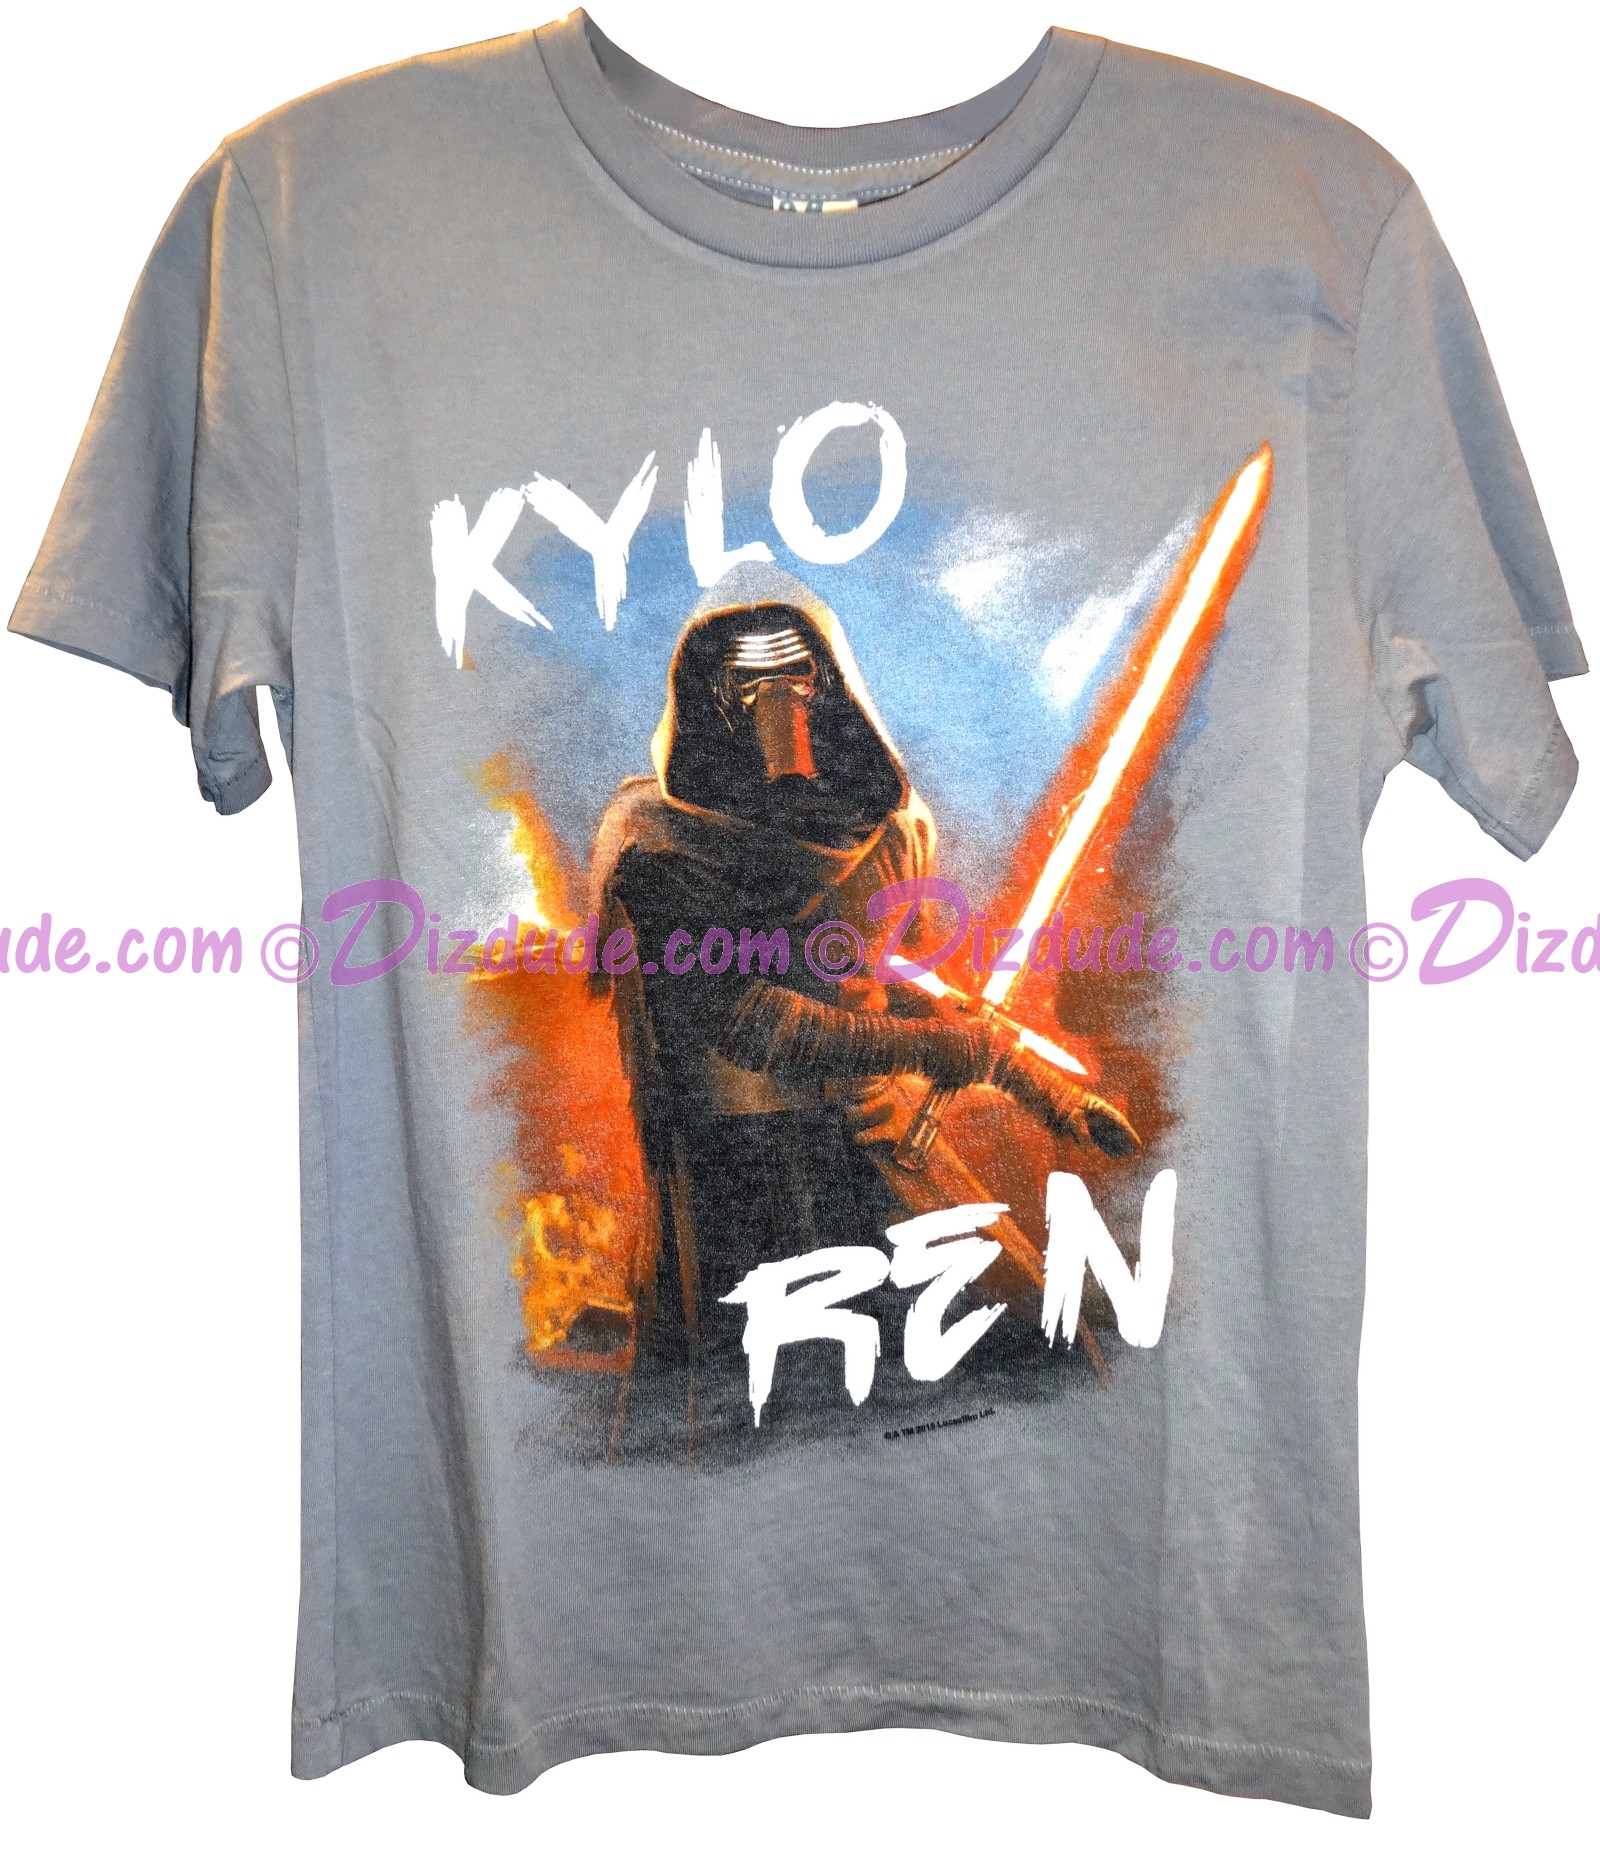 Kylo Ren Youth T-Shirt (Tshirt, T shirt or Tee) - Disney Star Wars: The Force Awakens © Dizdude.com